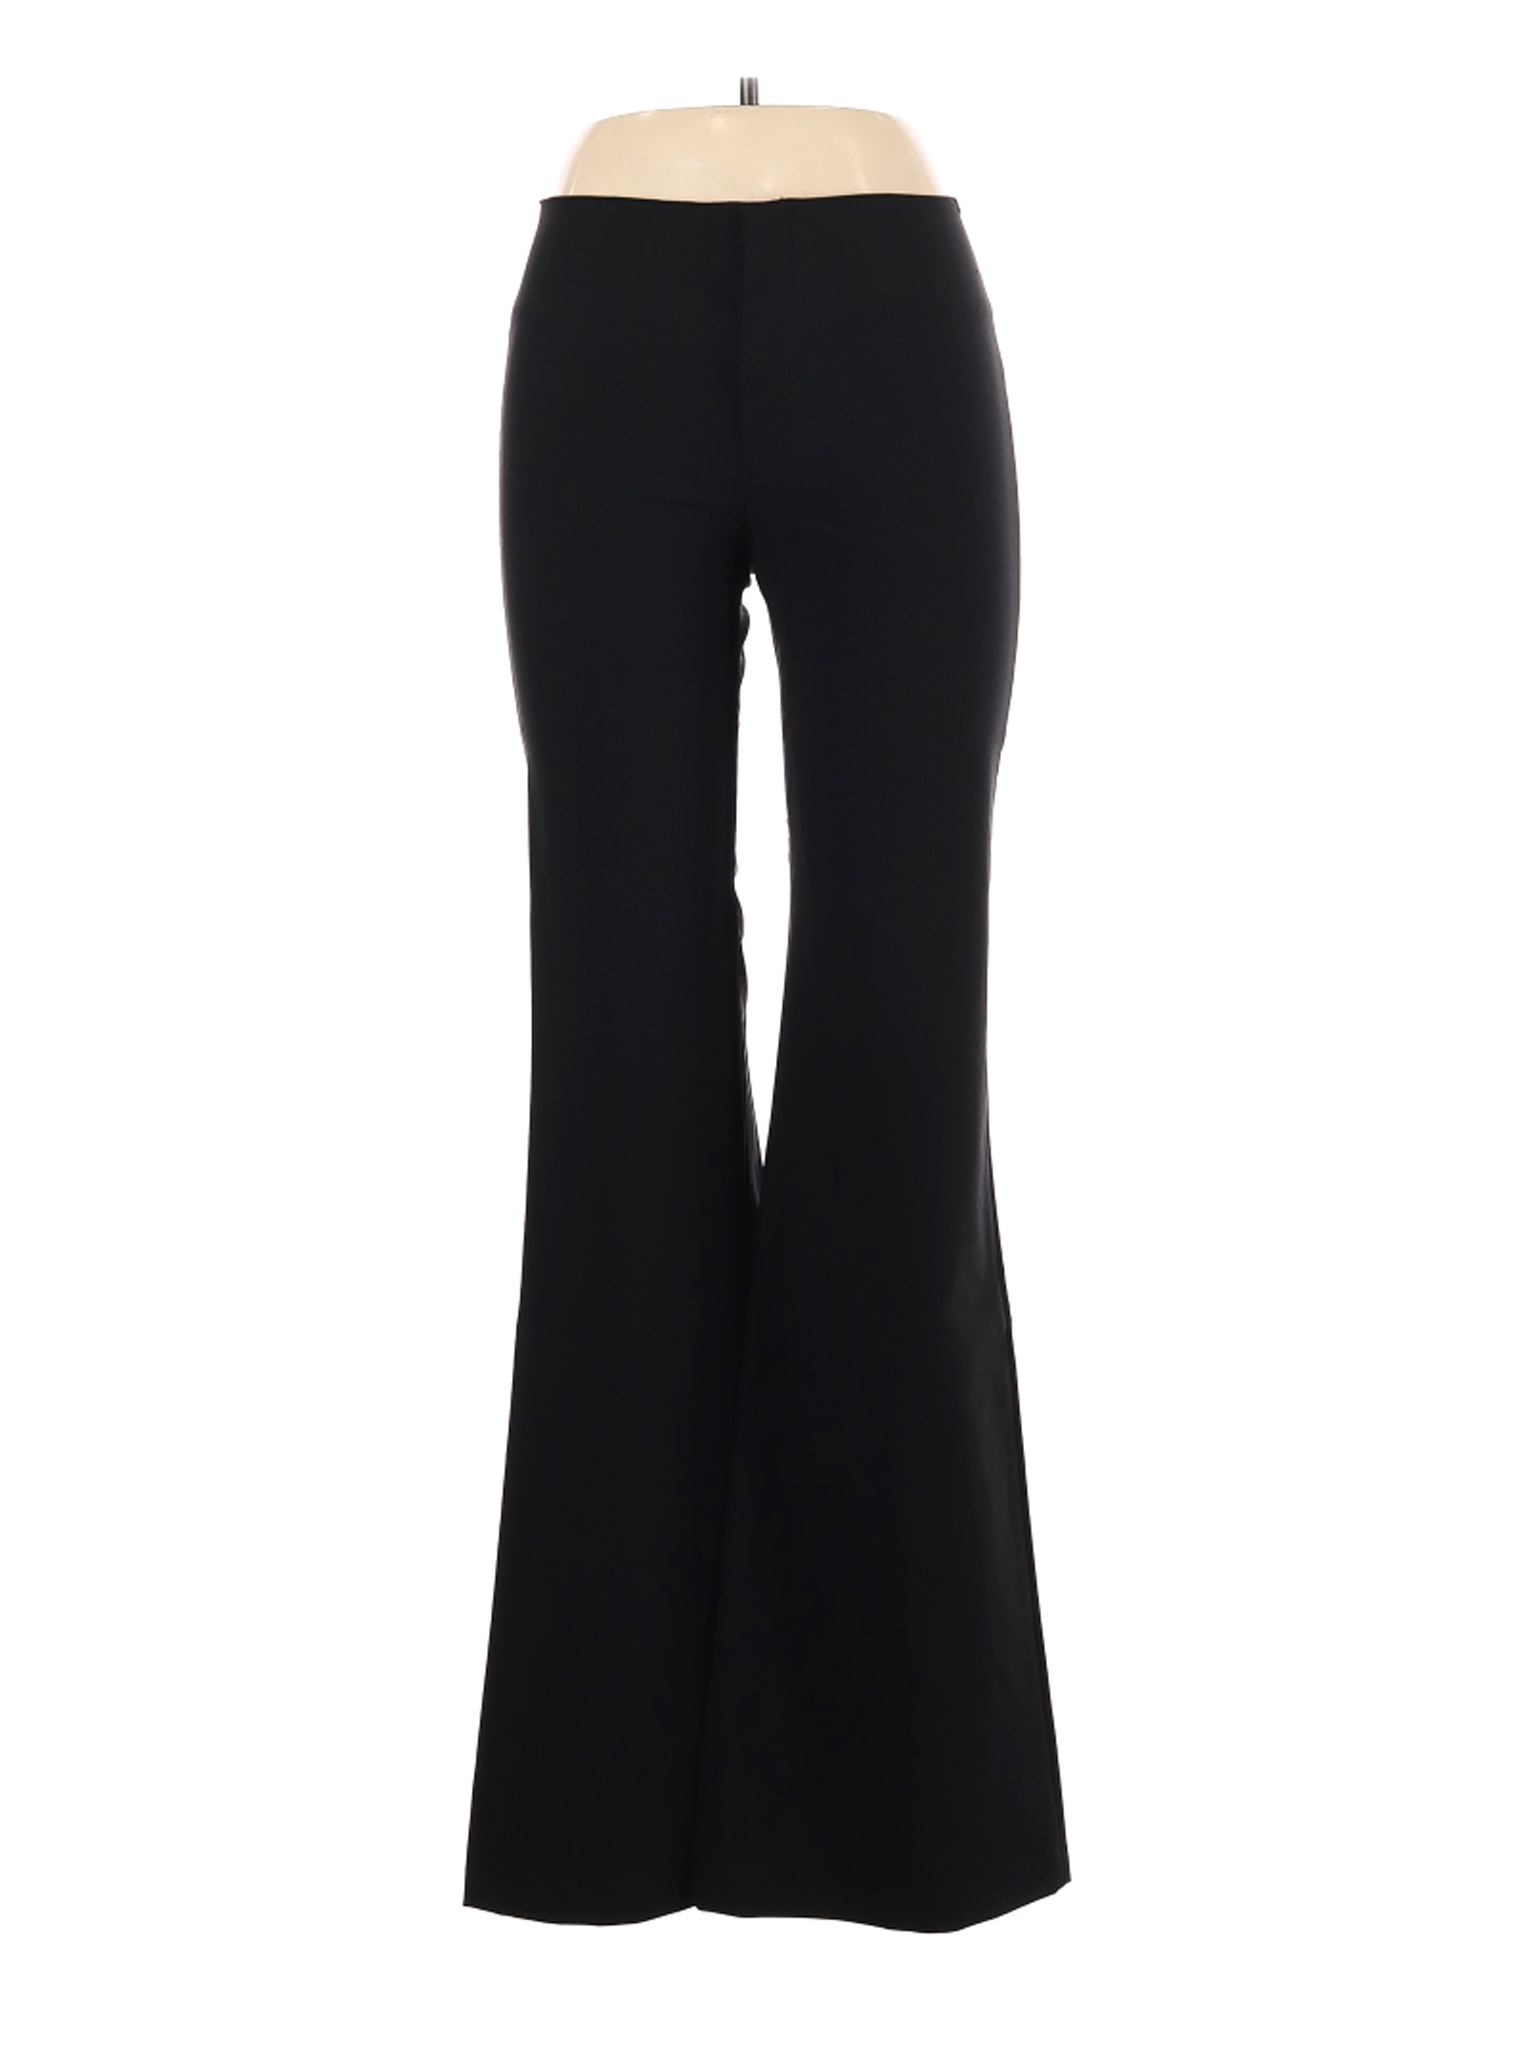 Tark '1 Women Black Casual Pants 4 | eBay